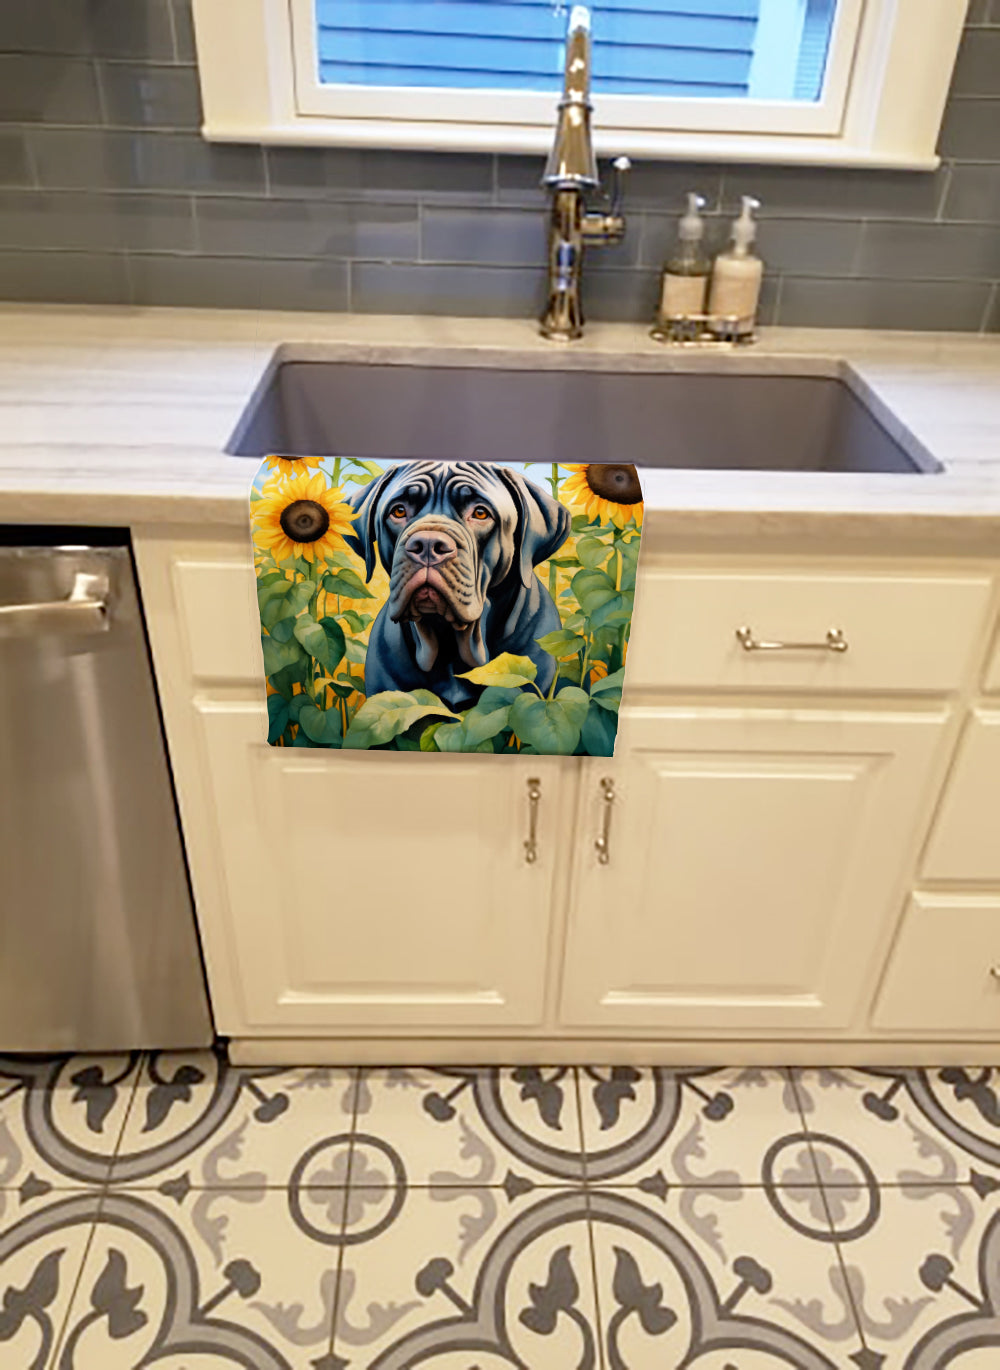 Buy this Neapolitan Mastiff in Sunflowers Kitchen Towel